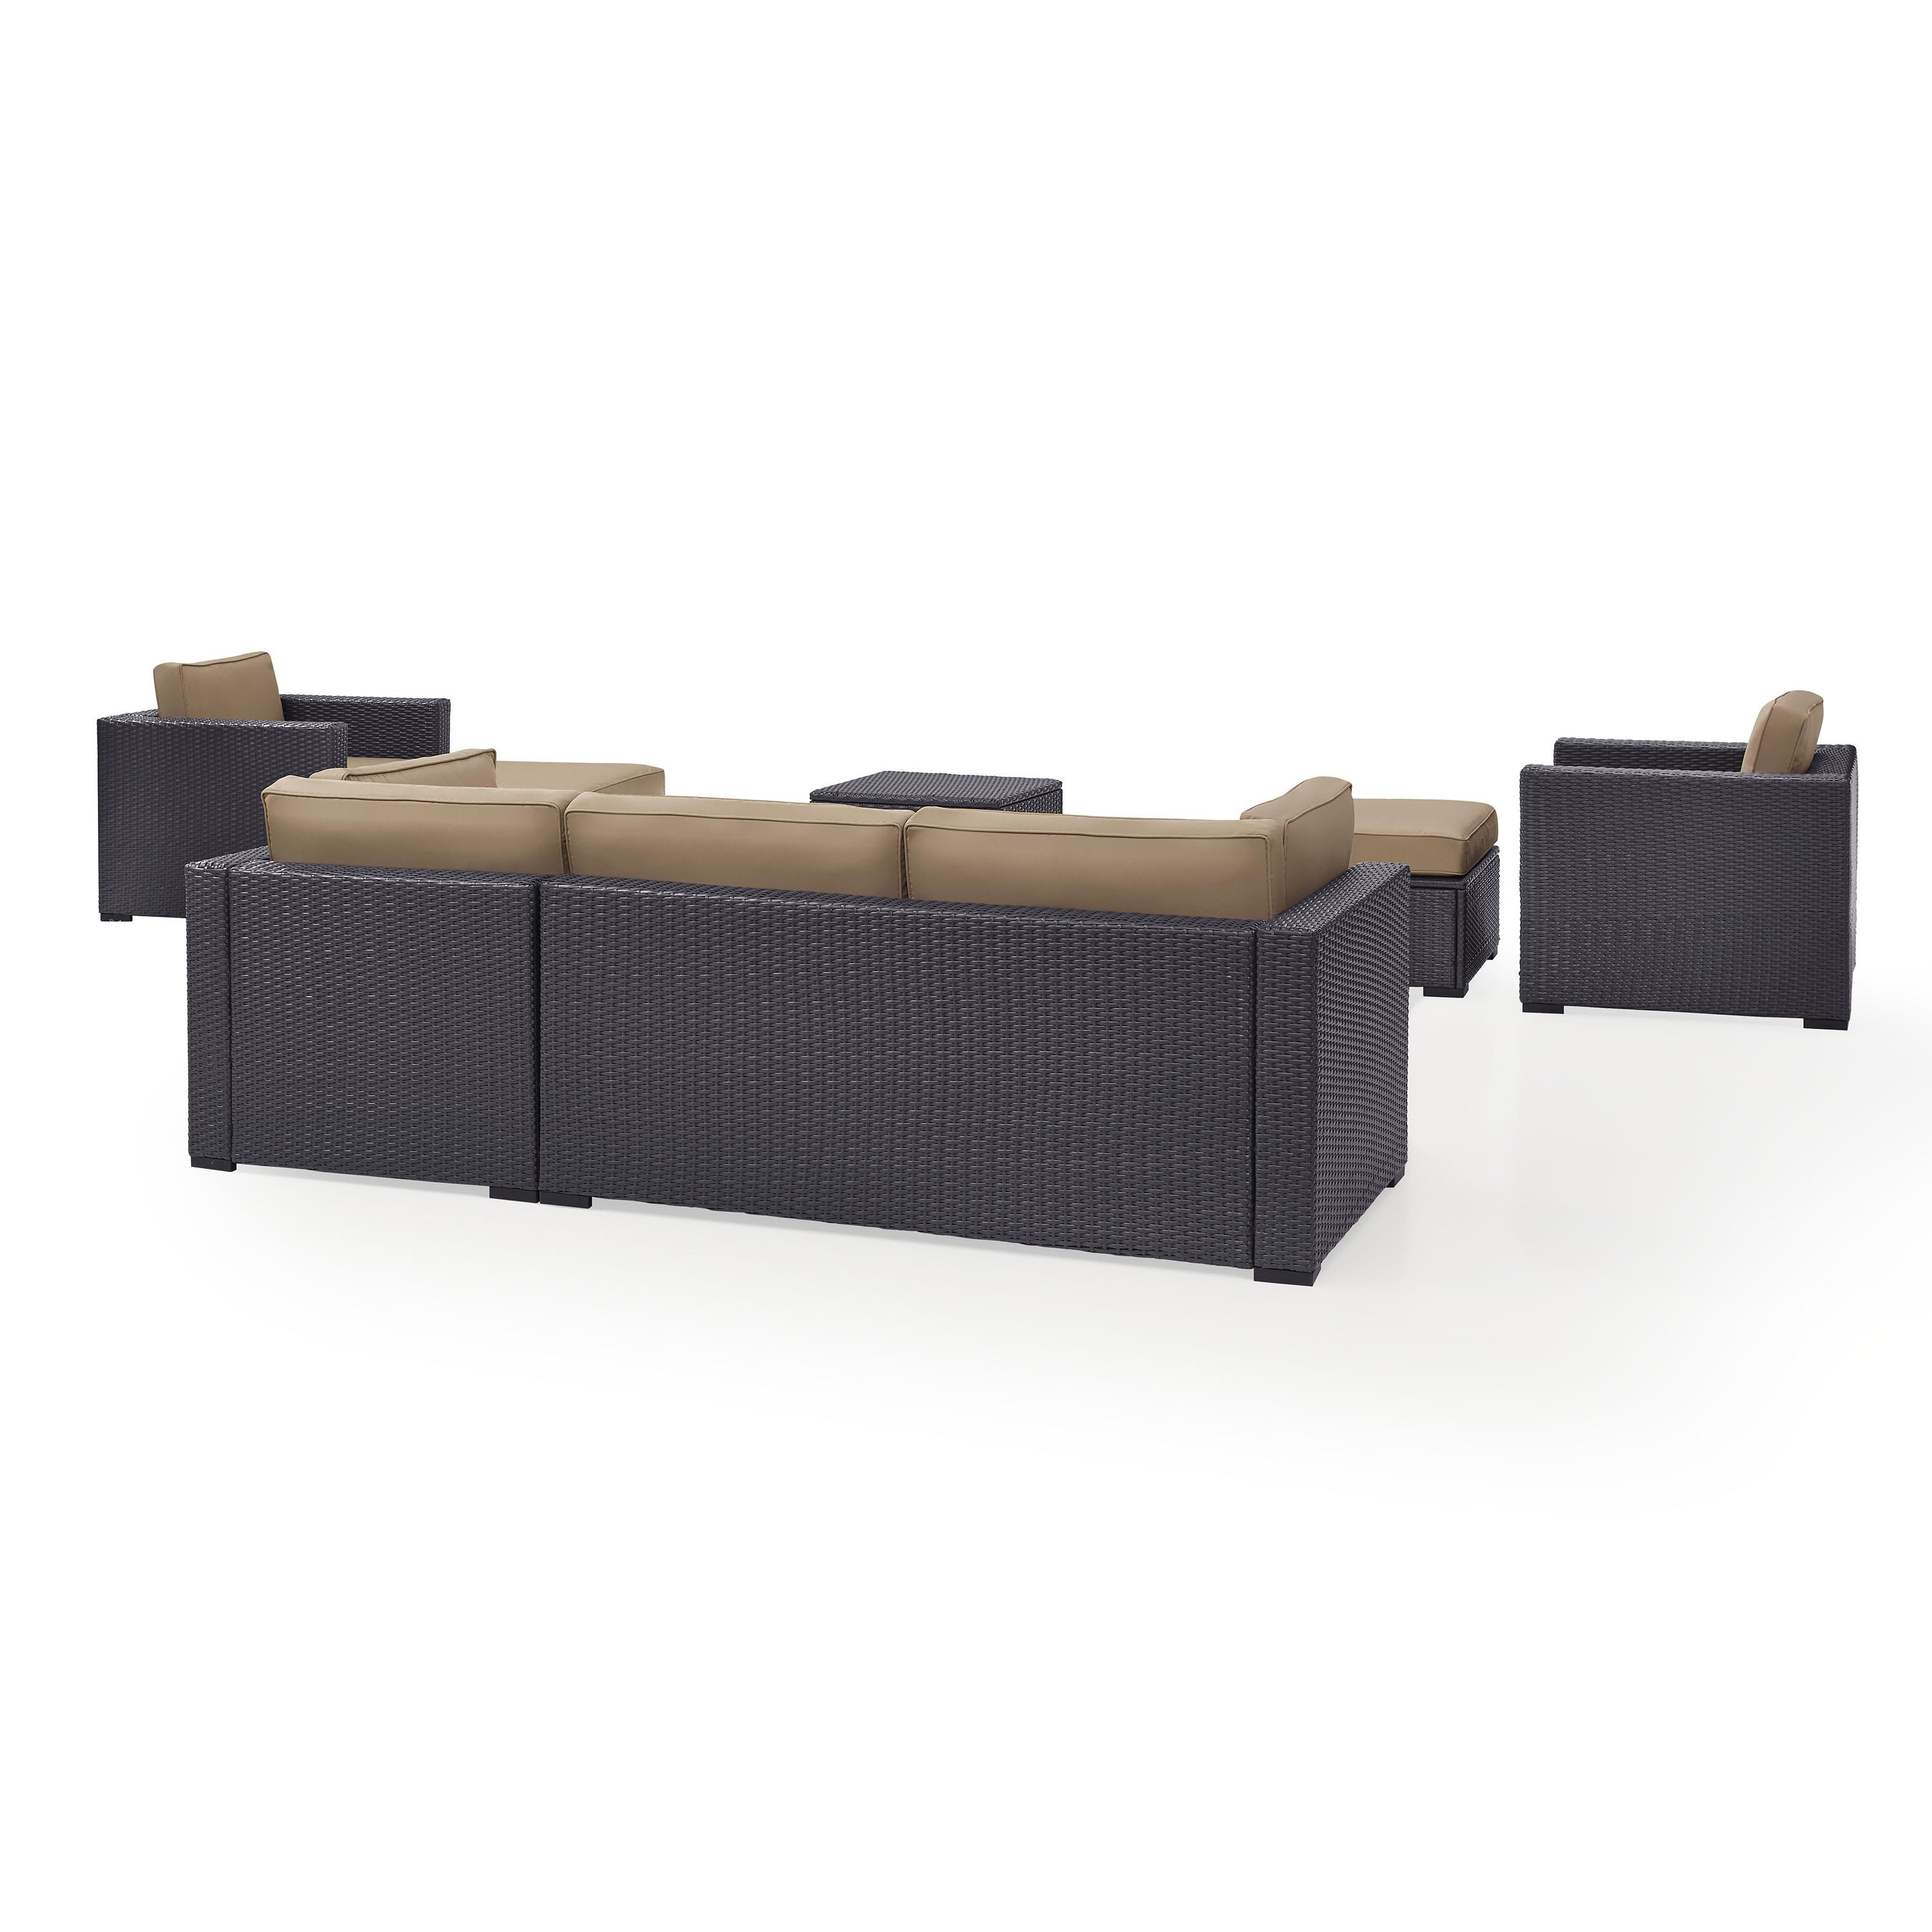 Crosley Furniture Biscayne 7 Piece Metal Patio Sofa Set in Brown/Mocha - image 4 of 4